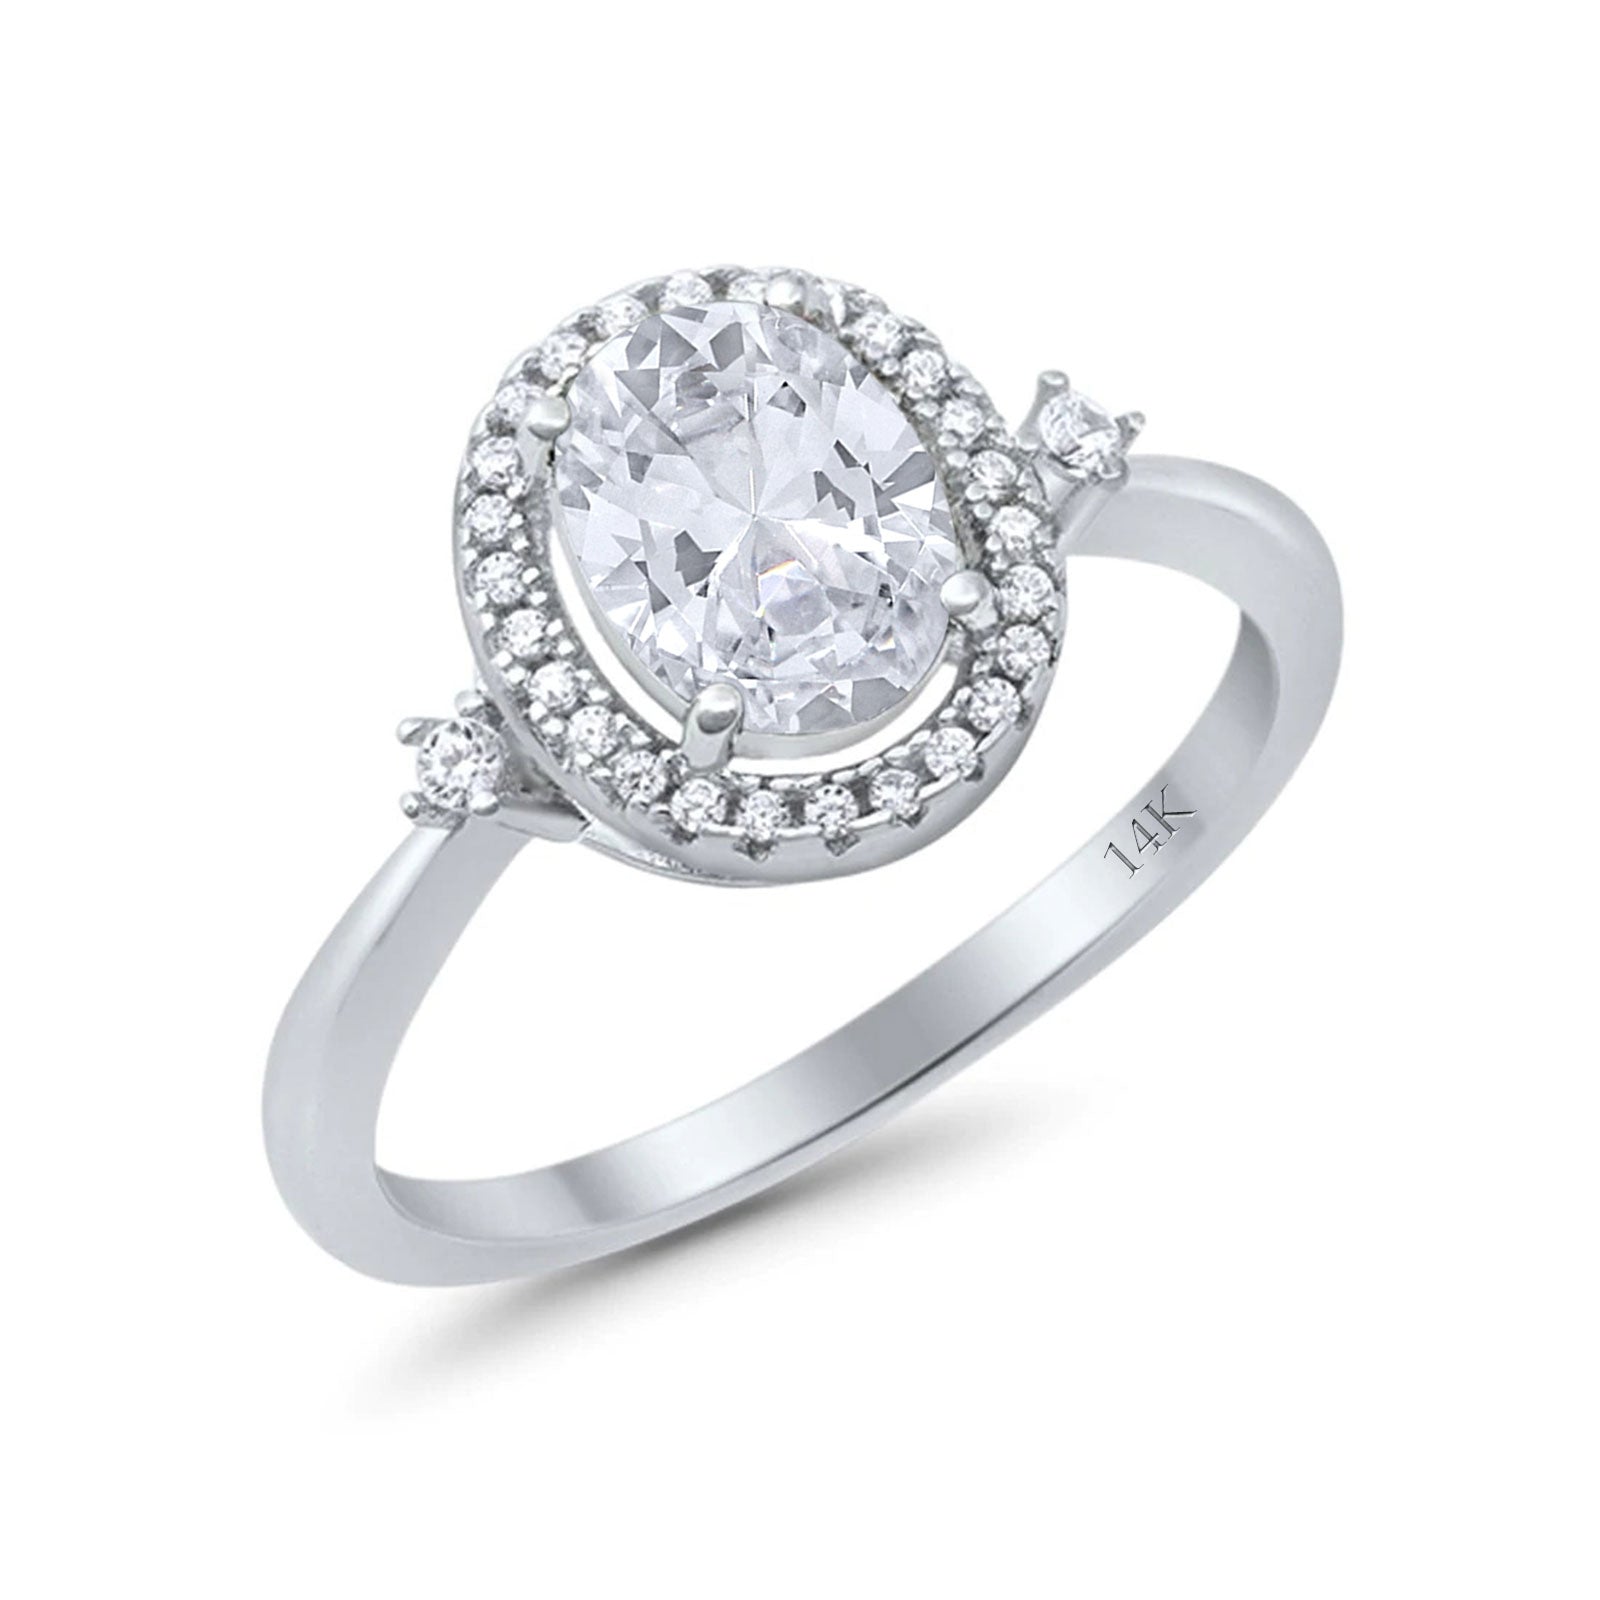 14K Gold Art Deco Halo Oval Shape Simulated Cubic Zirconia Bridal Wedding Engagement Ring